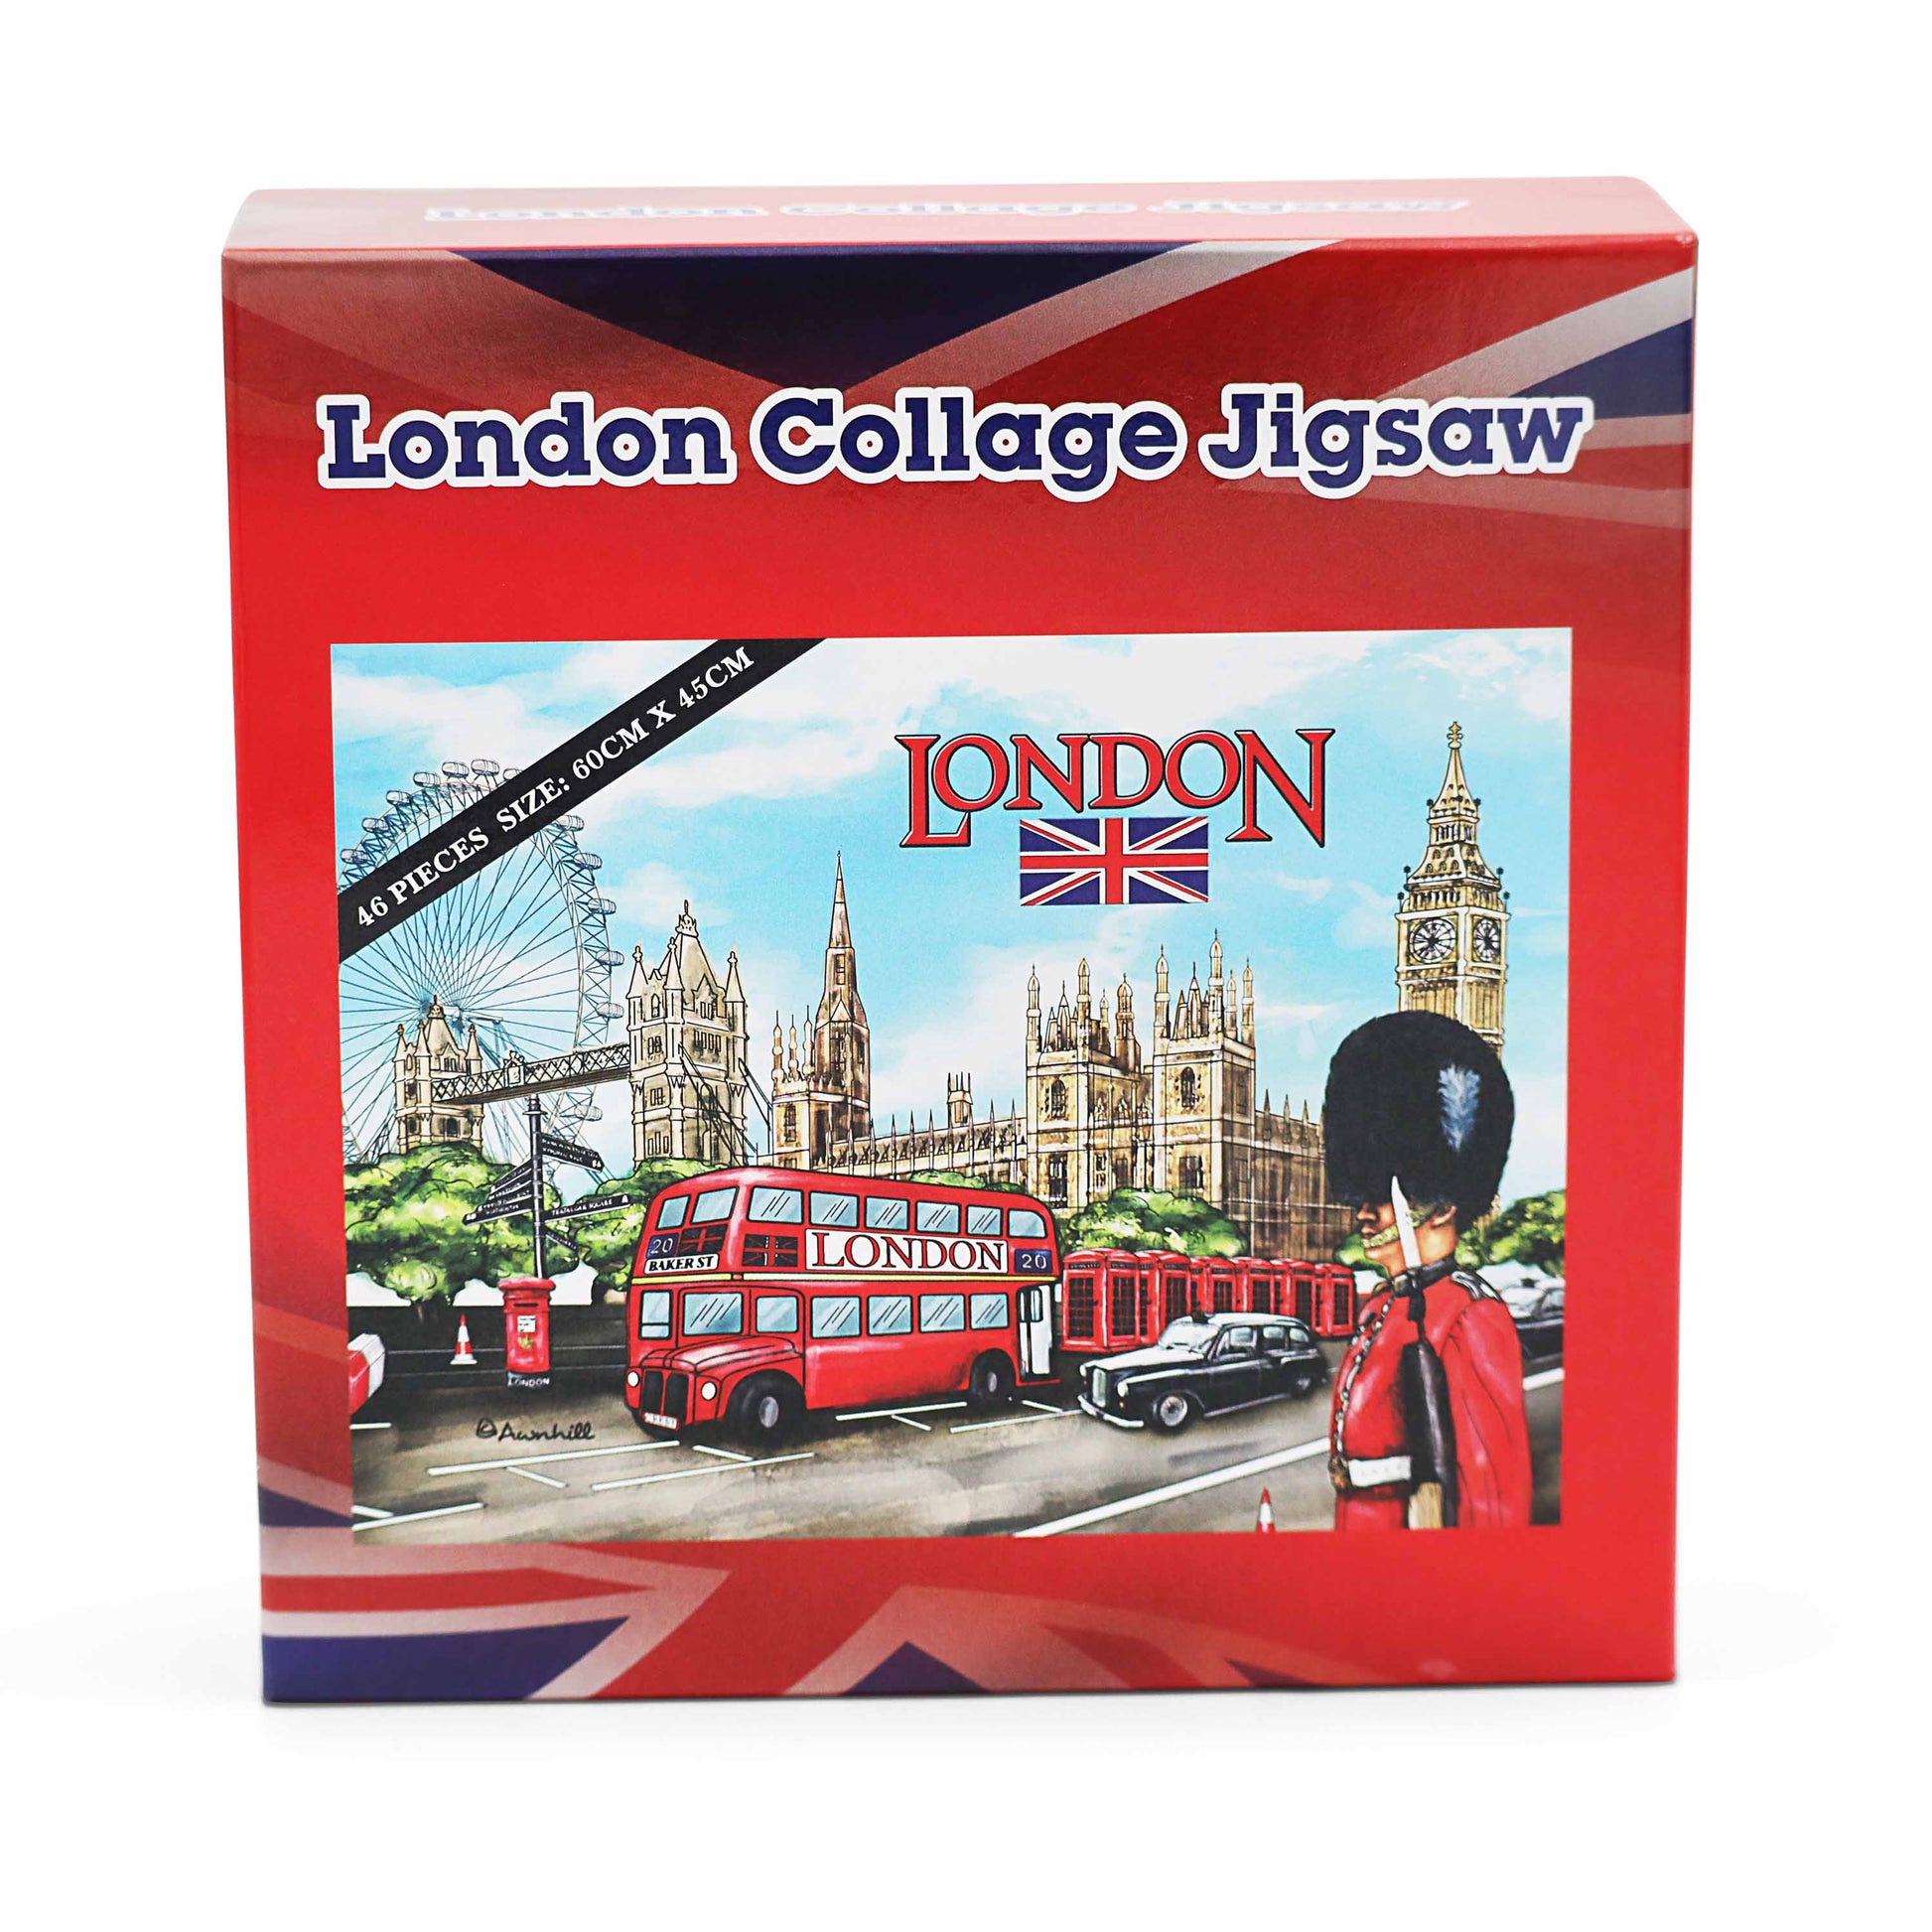 London Collage Souvenir Jigsaw Puzzle - 46pc - British Gifts UK